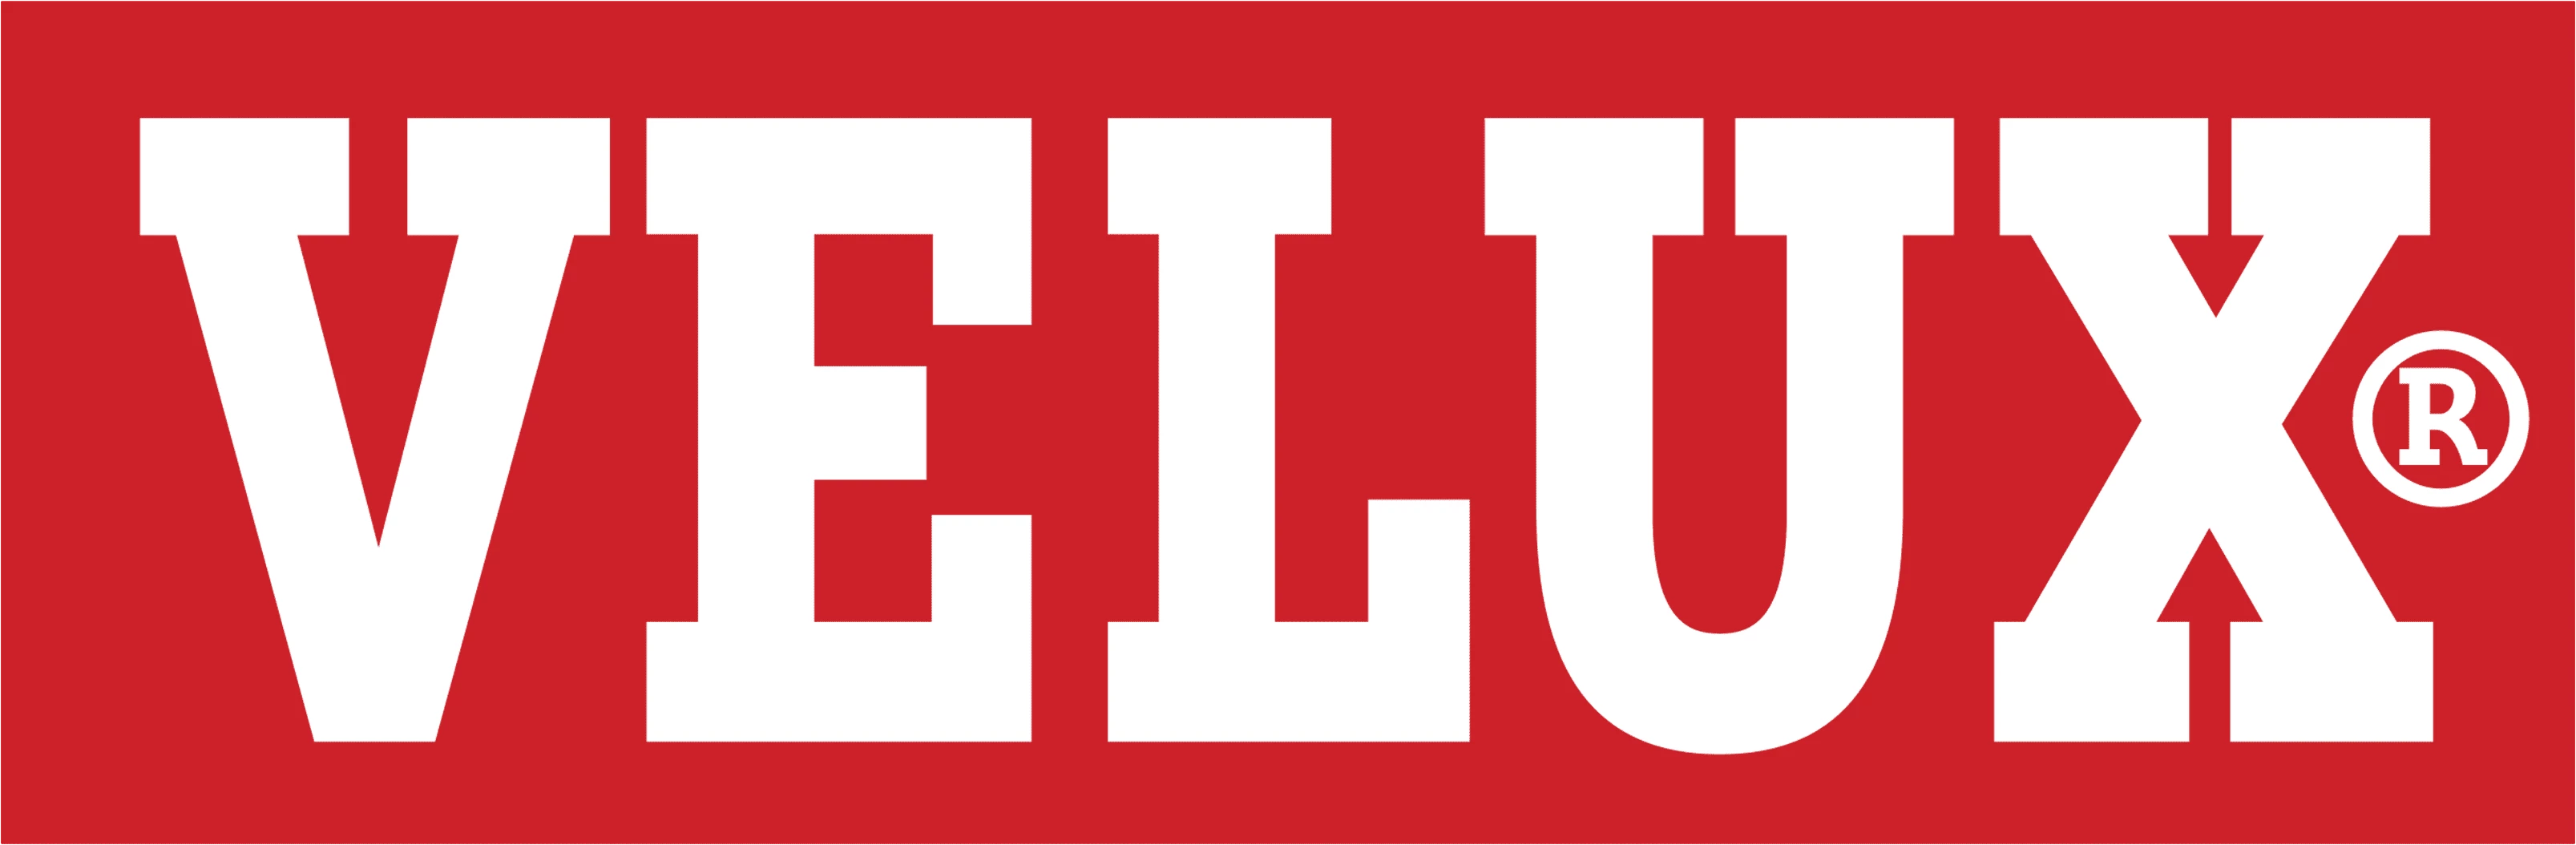 Velux-logo.png